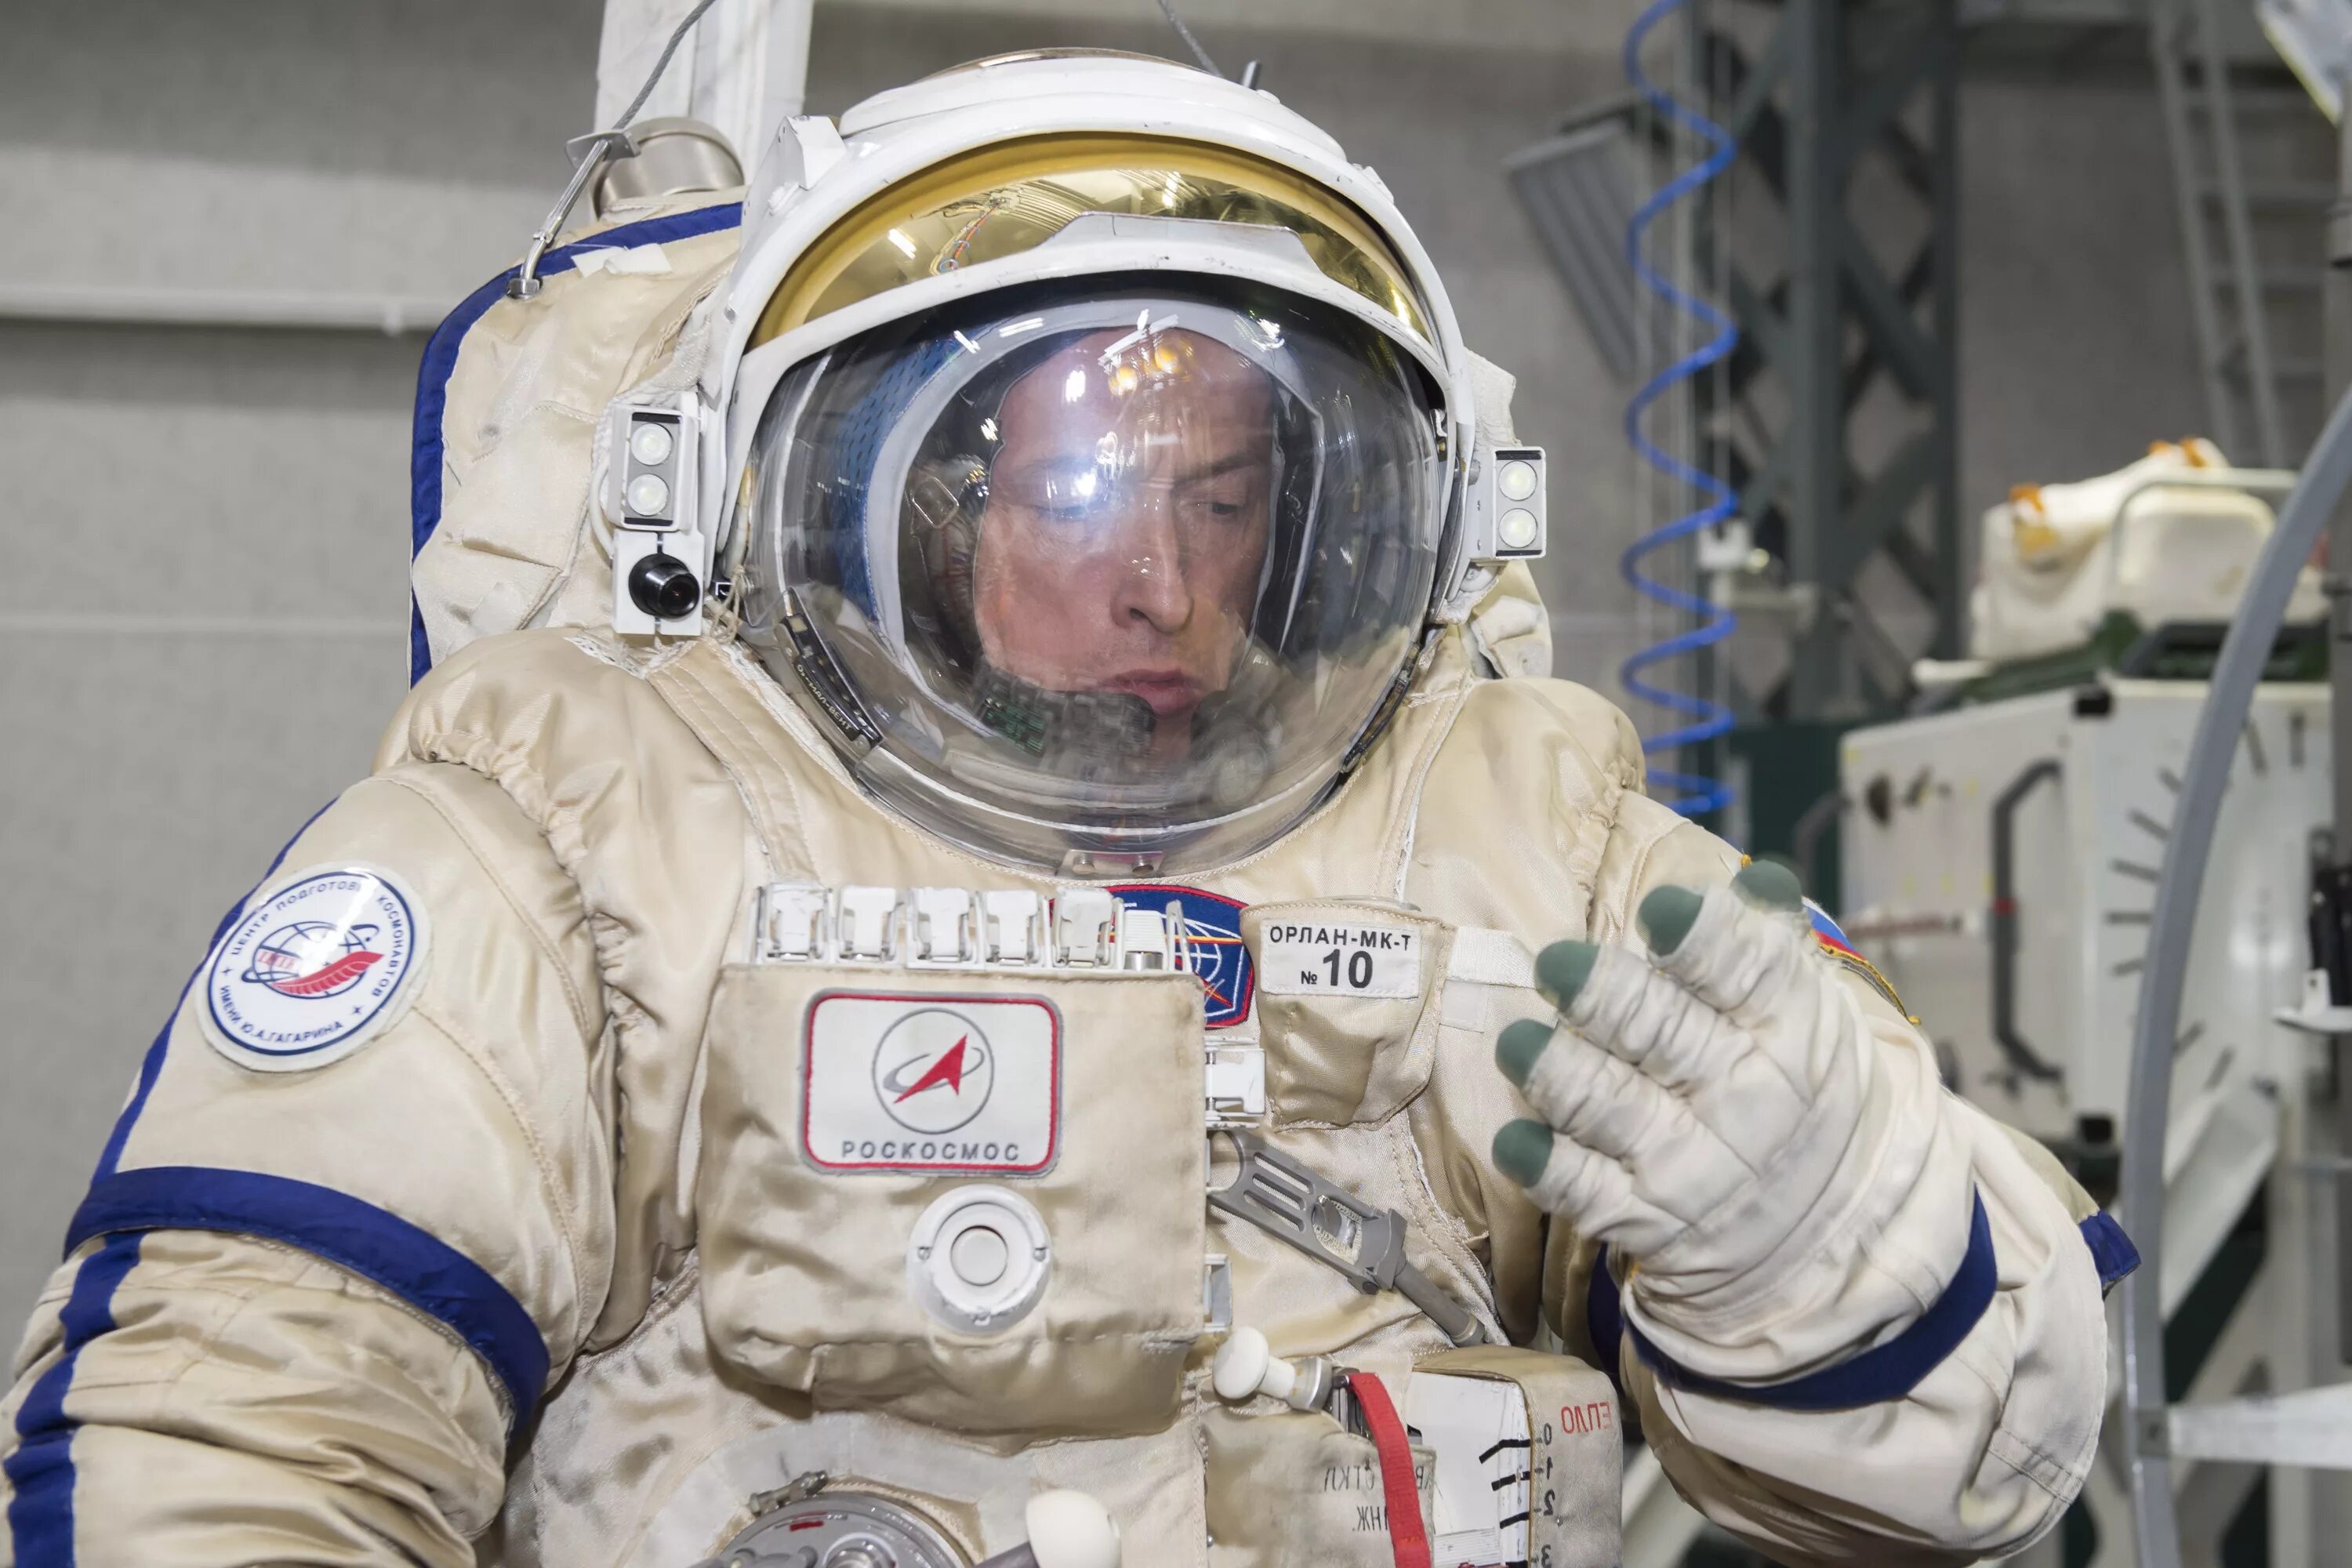 Космонавт 2024 г. Скафандр Космонавта Орлан. Скафандр Космонавта Орлан МКС. Орлан-МКС ВКД. Орлан костюм Космонавта.